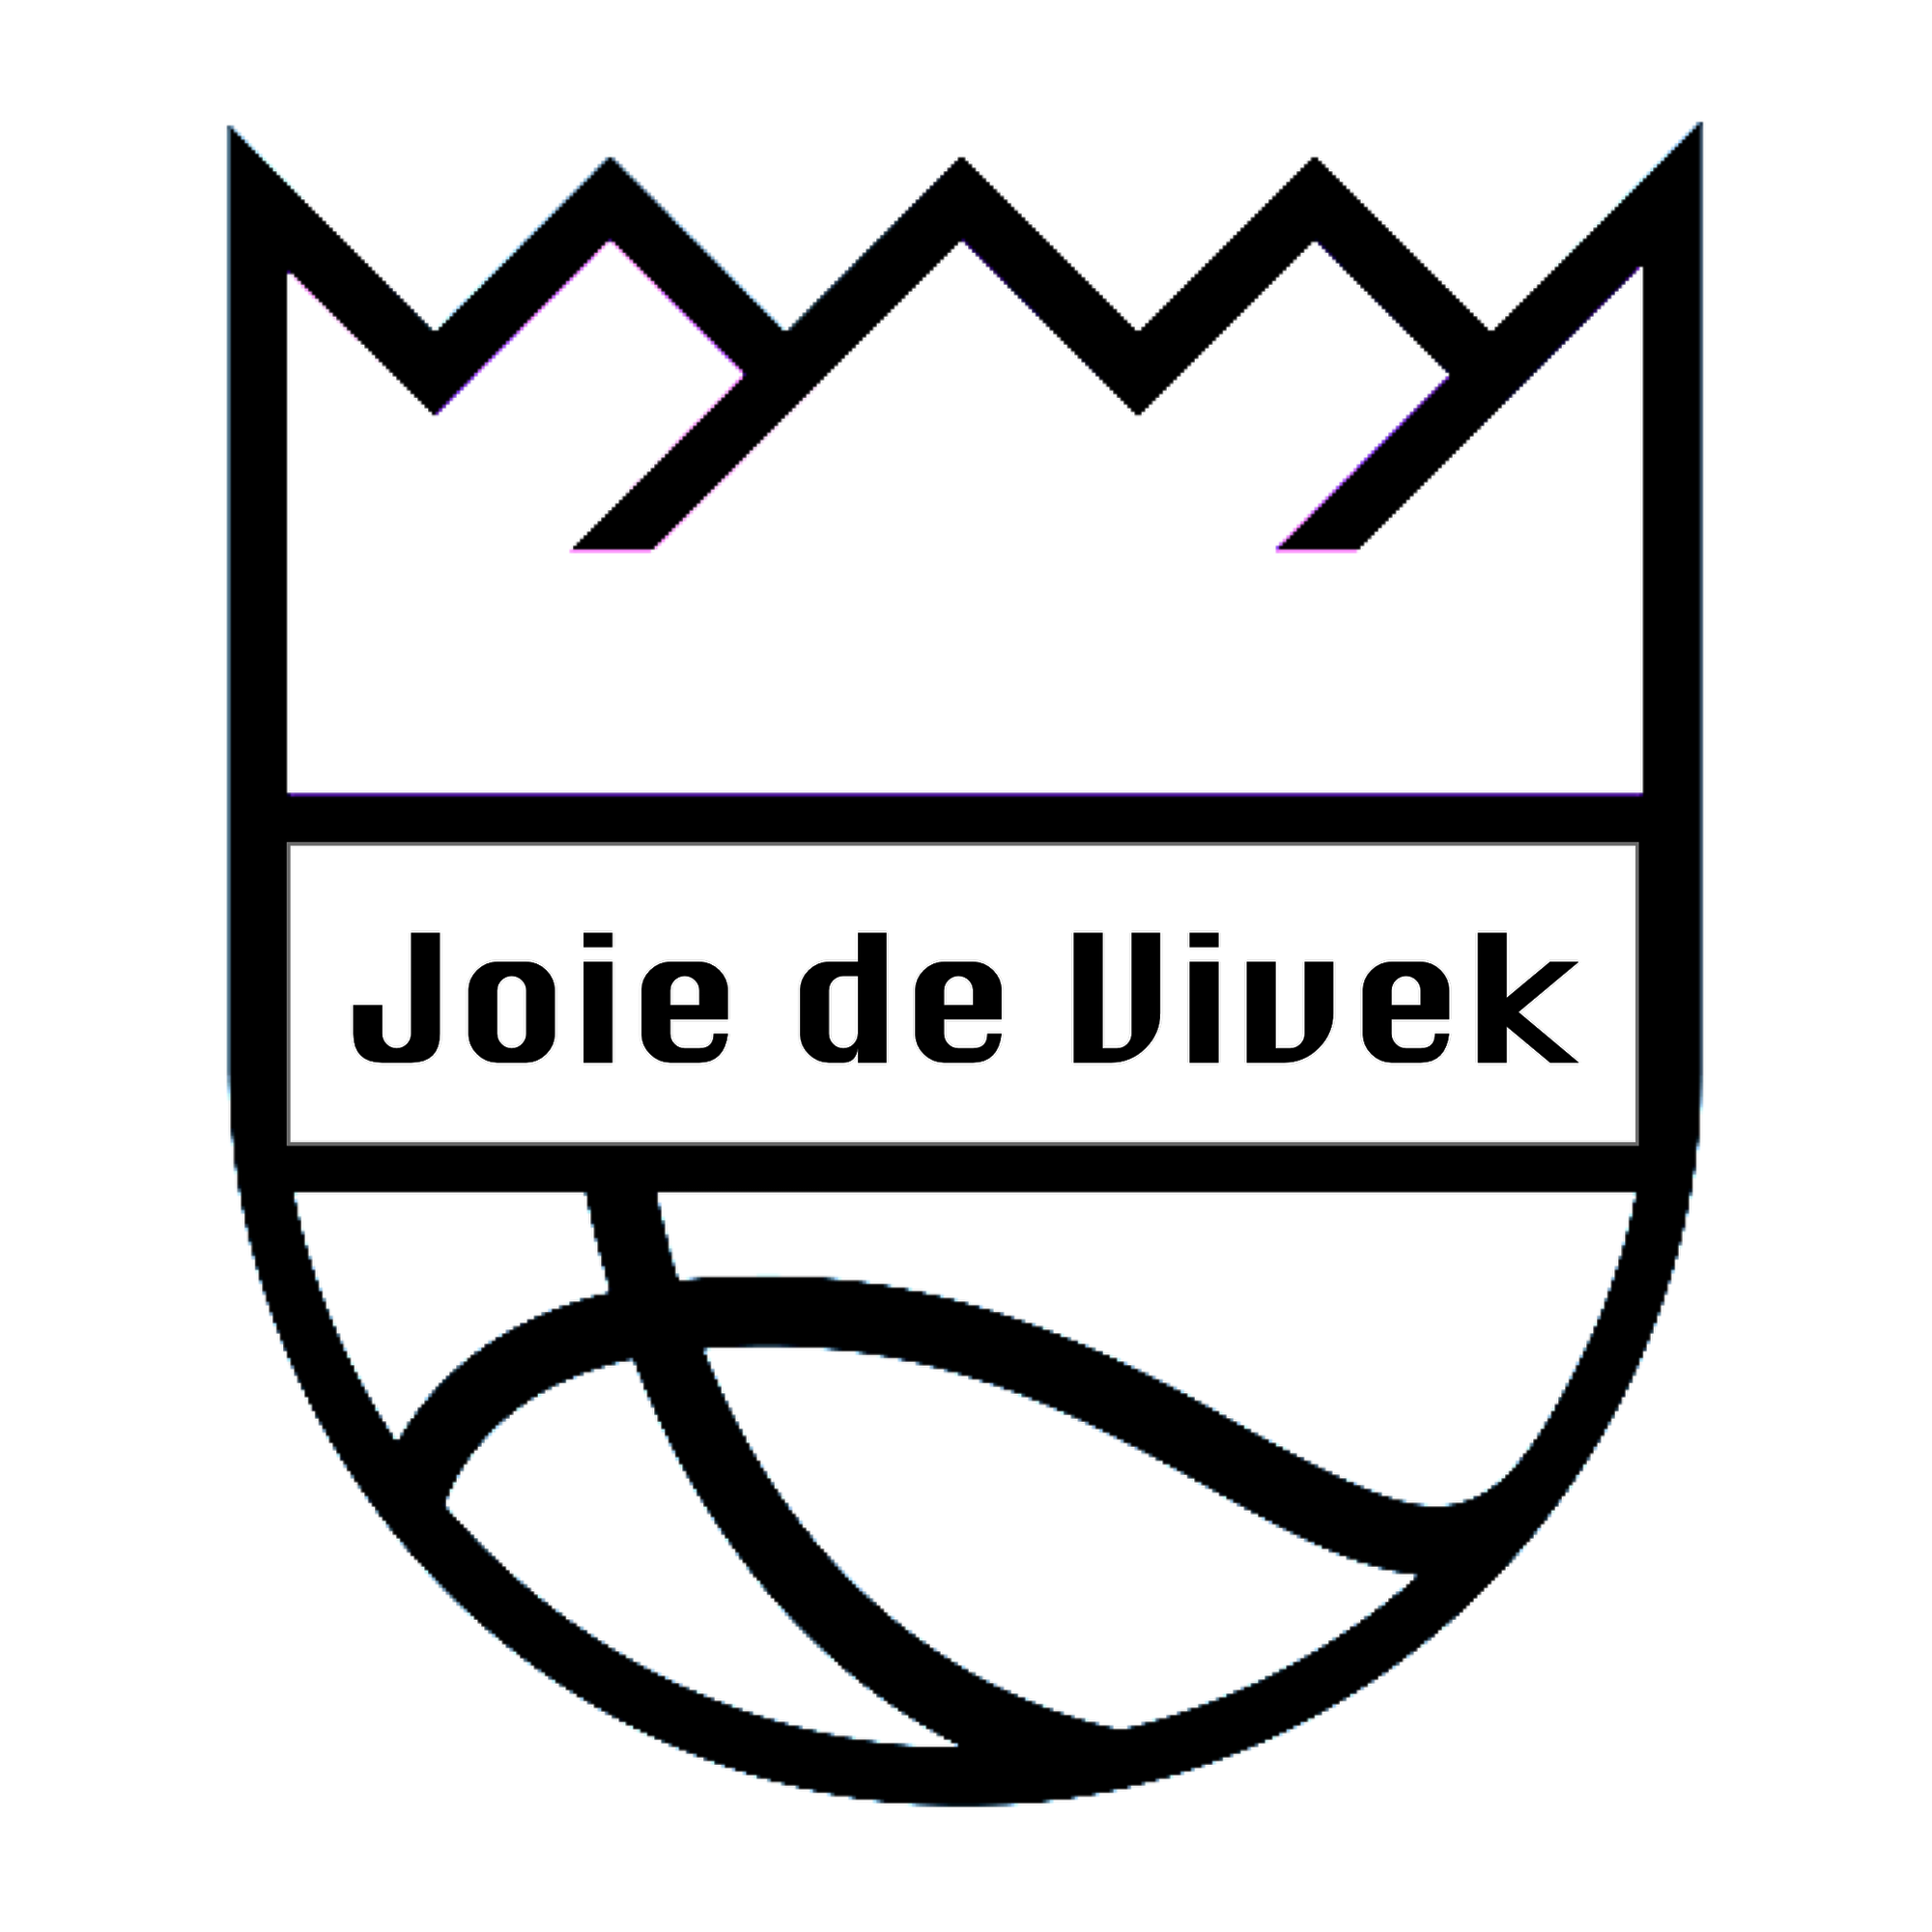 white Joie de Vivek logo